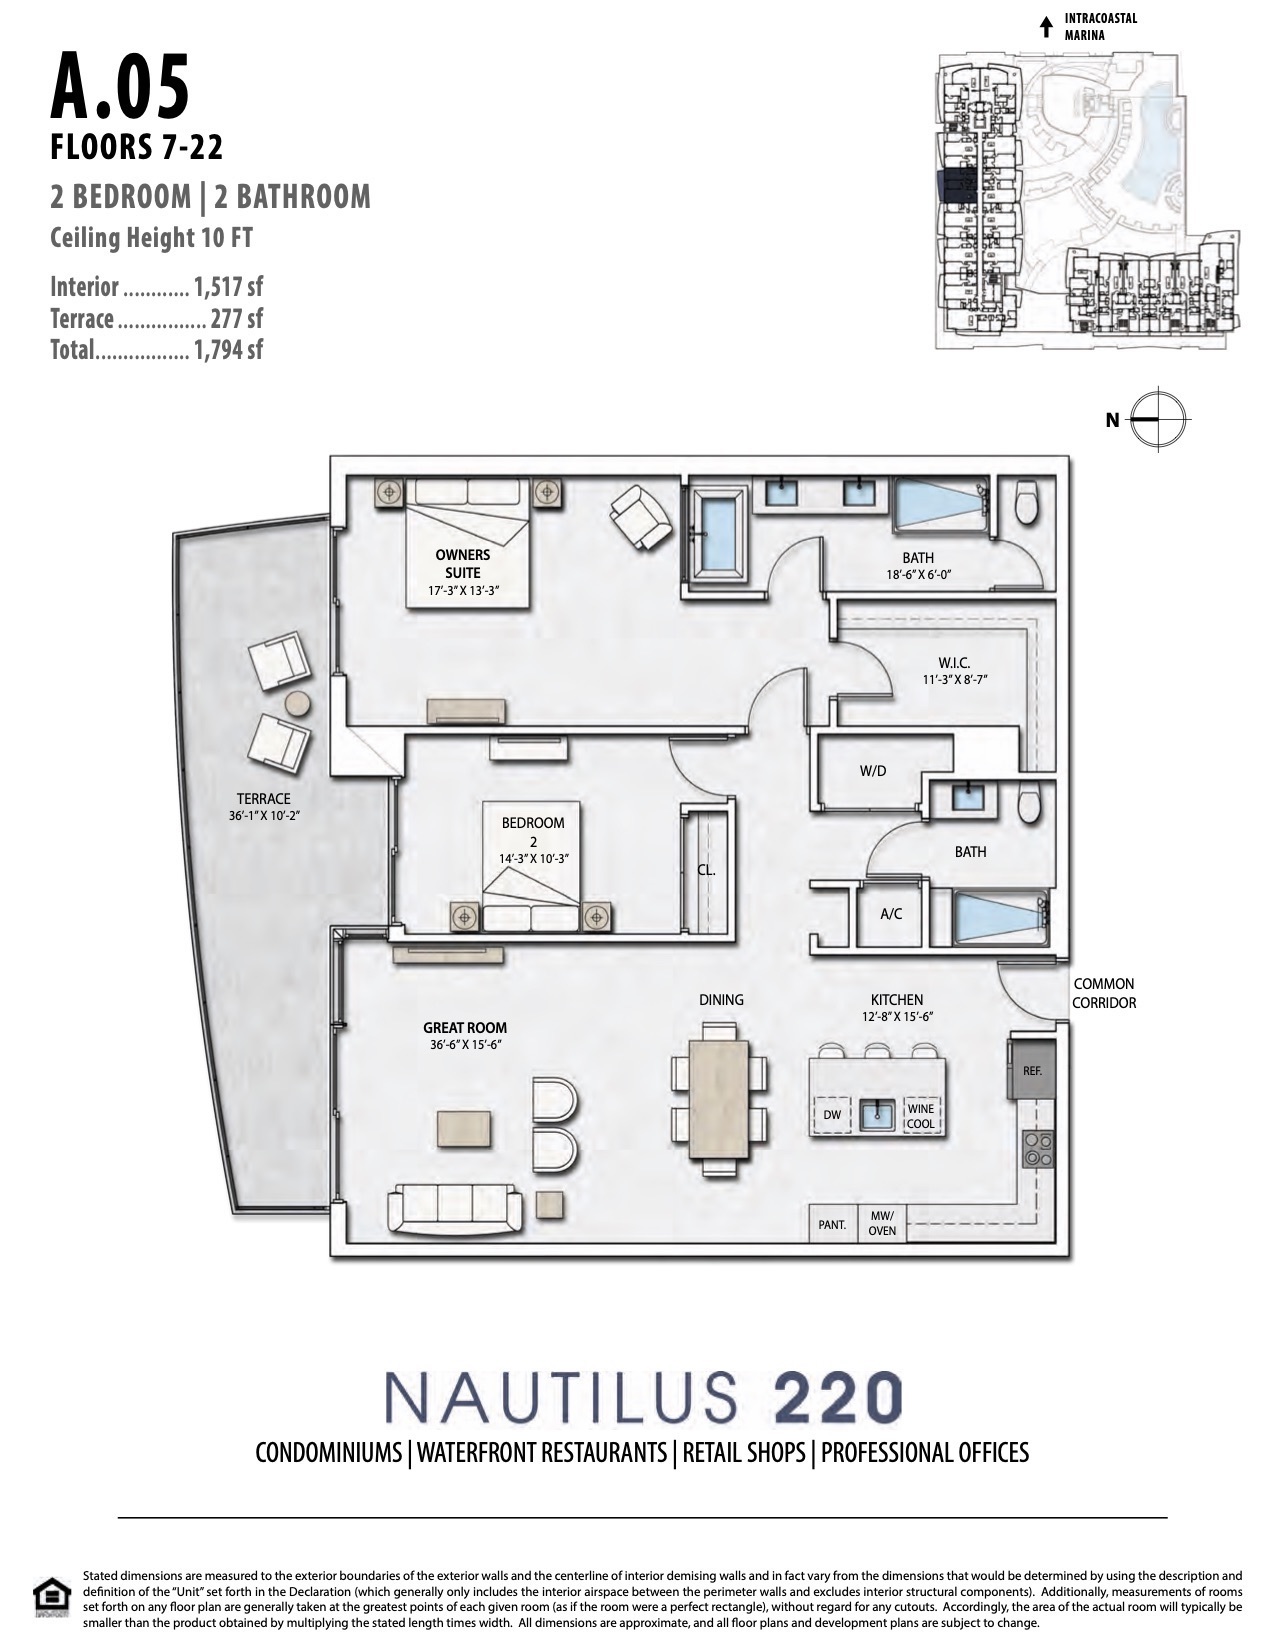 Floor Plan for Nautilus 220 Floorplans, A.05